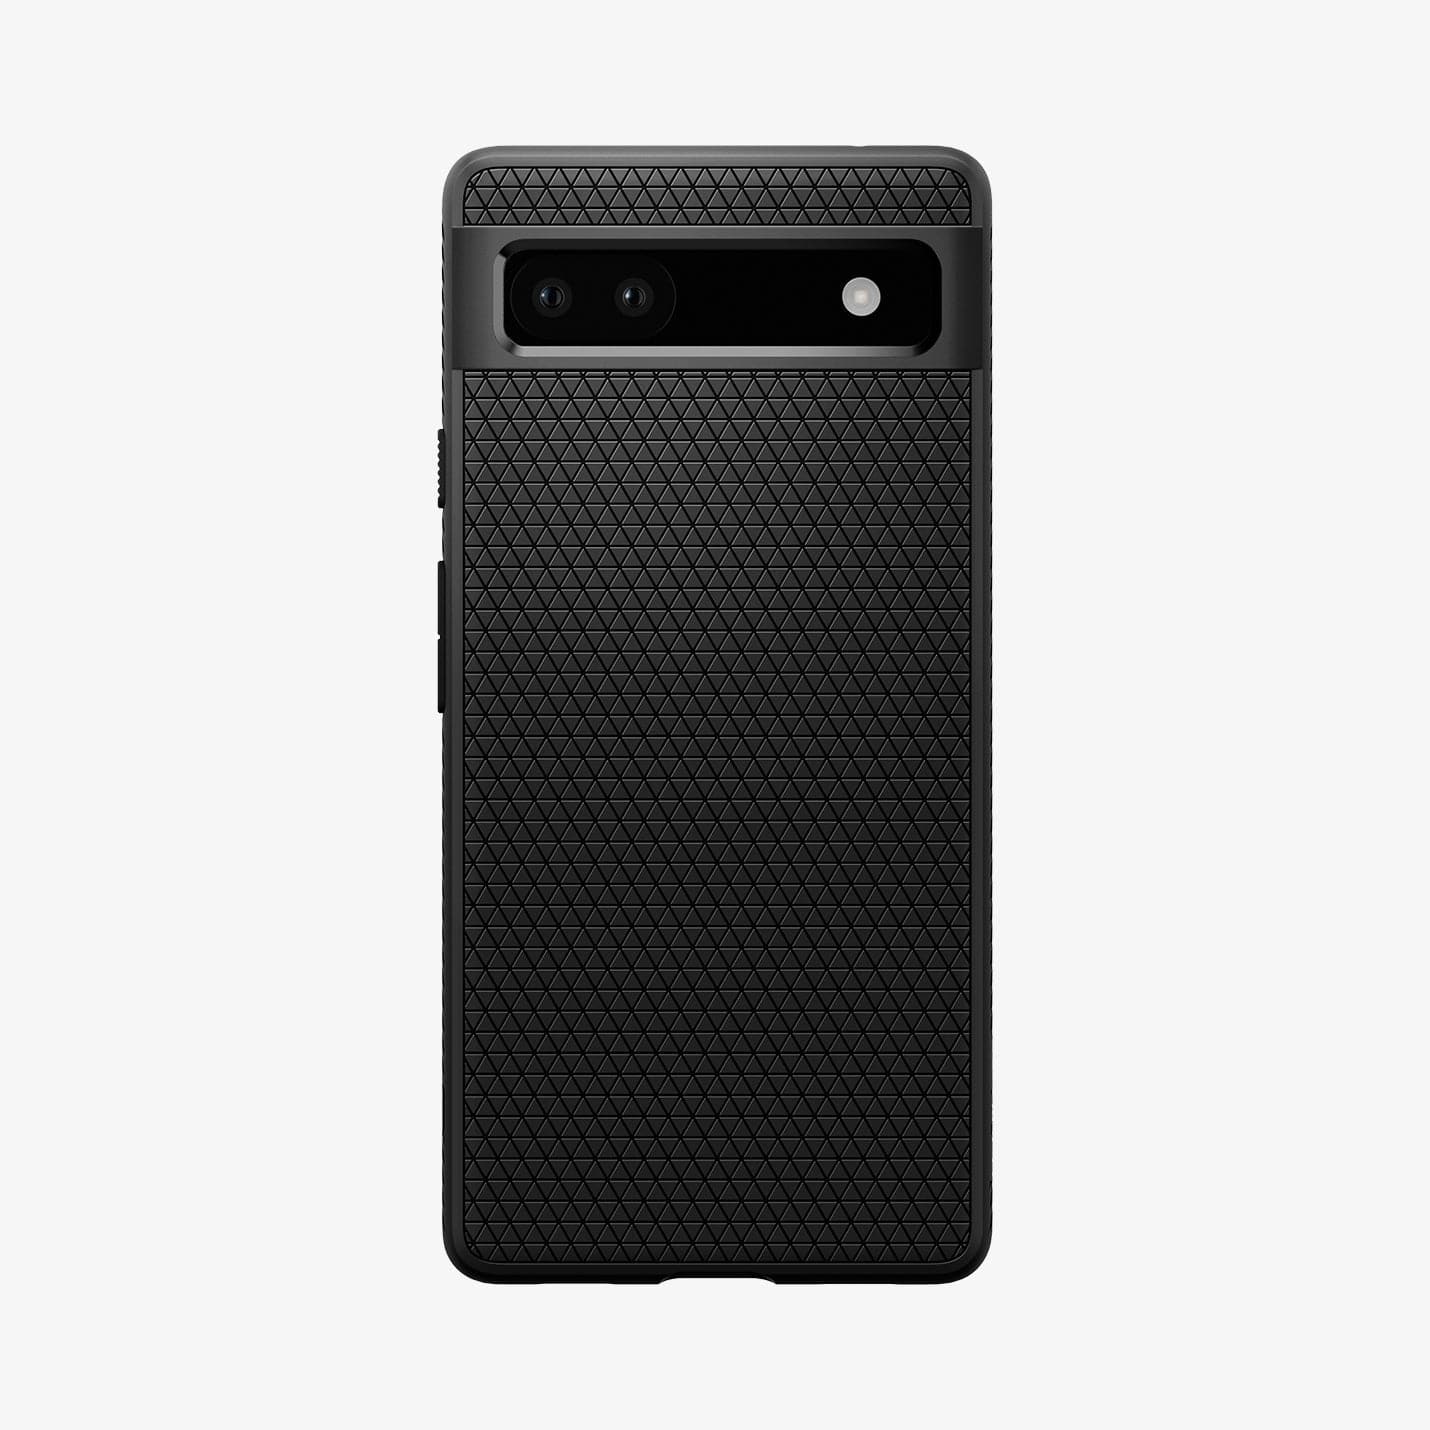 ACS04474 - Pixel 6a Case Liquid Air in matte black showing the back